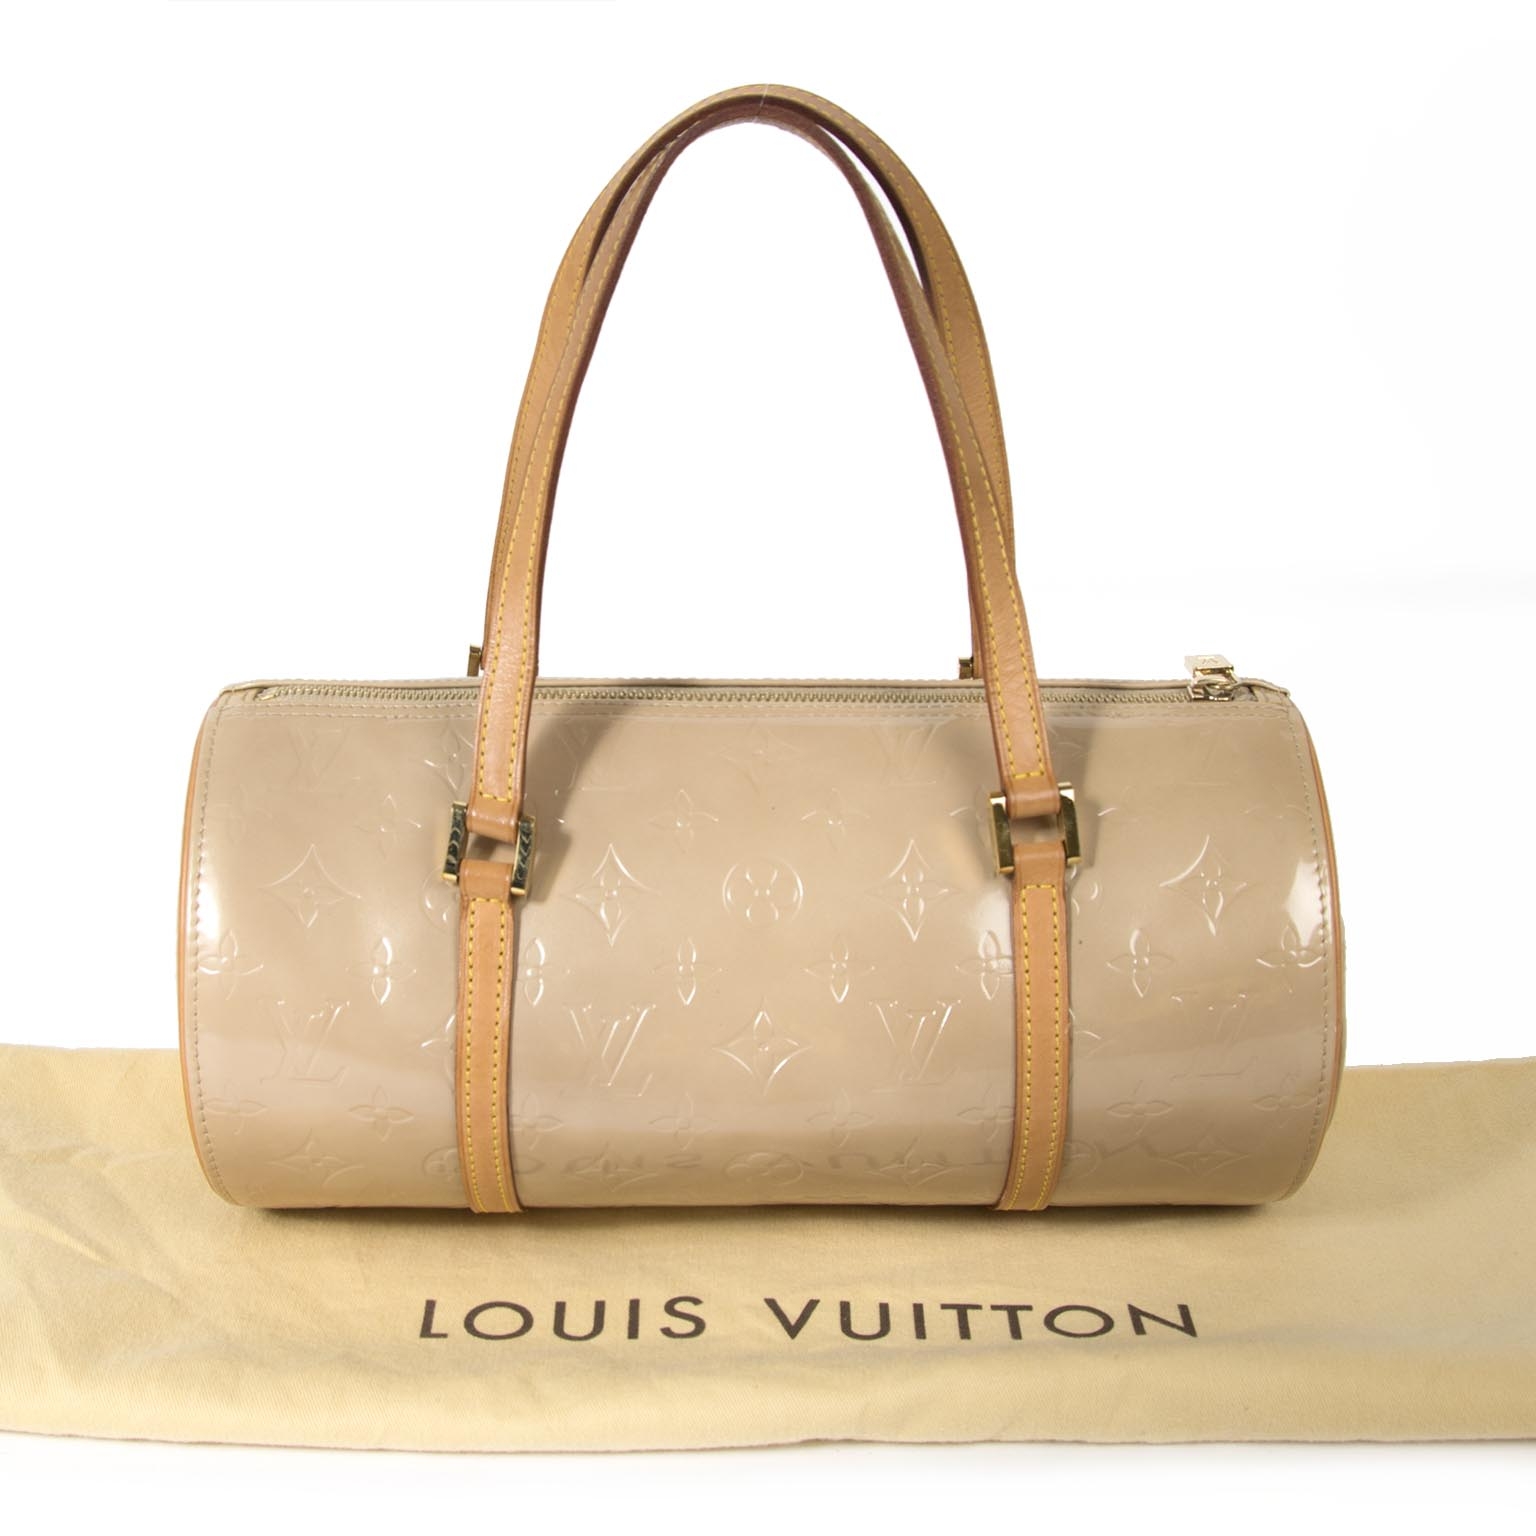 At Auction: Louis Vuitton, LOUIS VUITTON BEDFORD VANILLA CALF